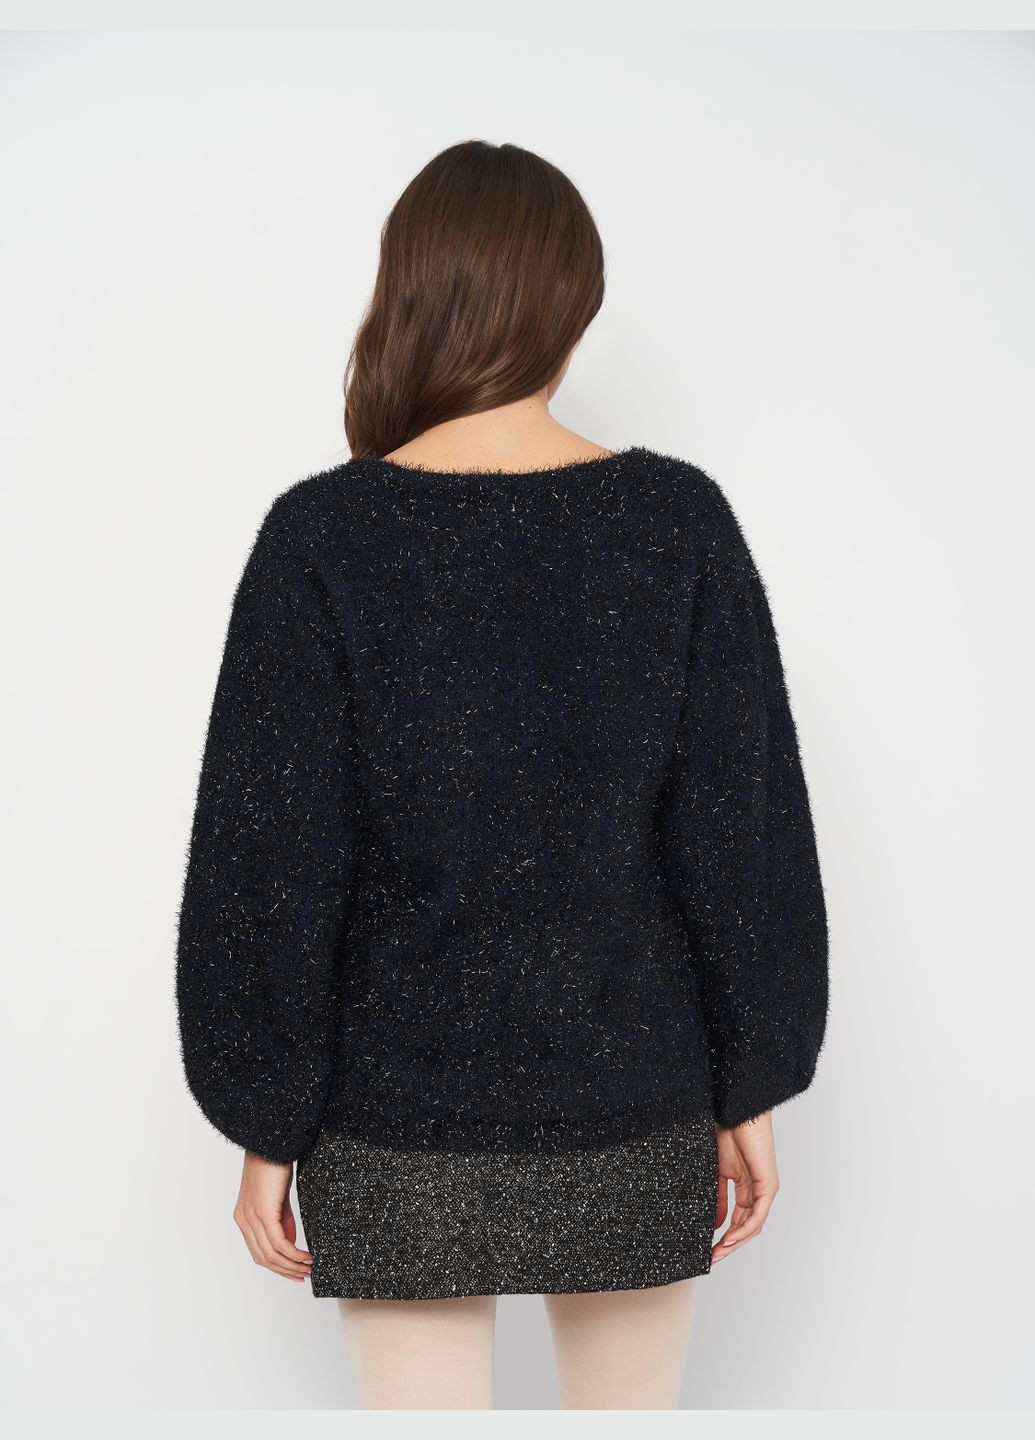 Черный зимний свитер оверсайз H&M